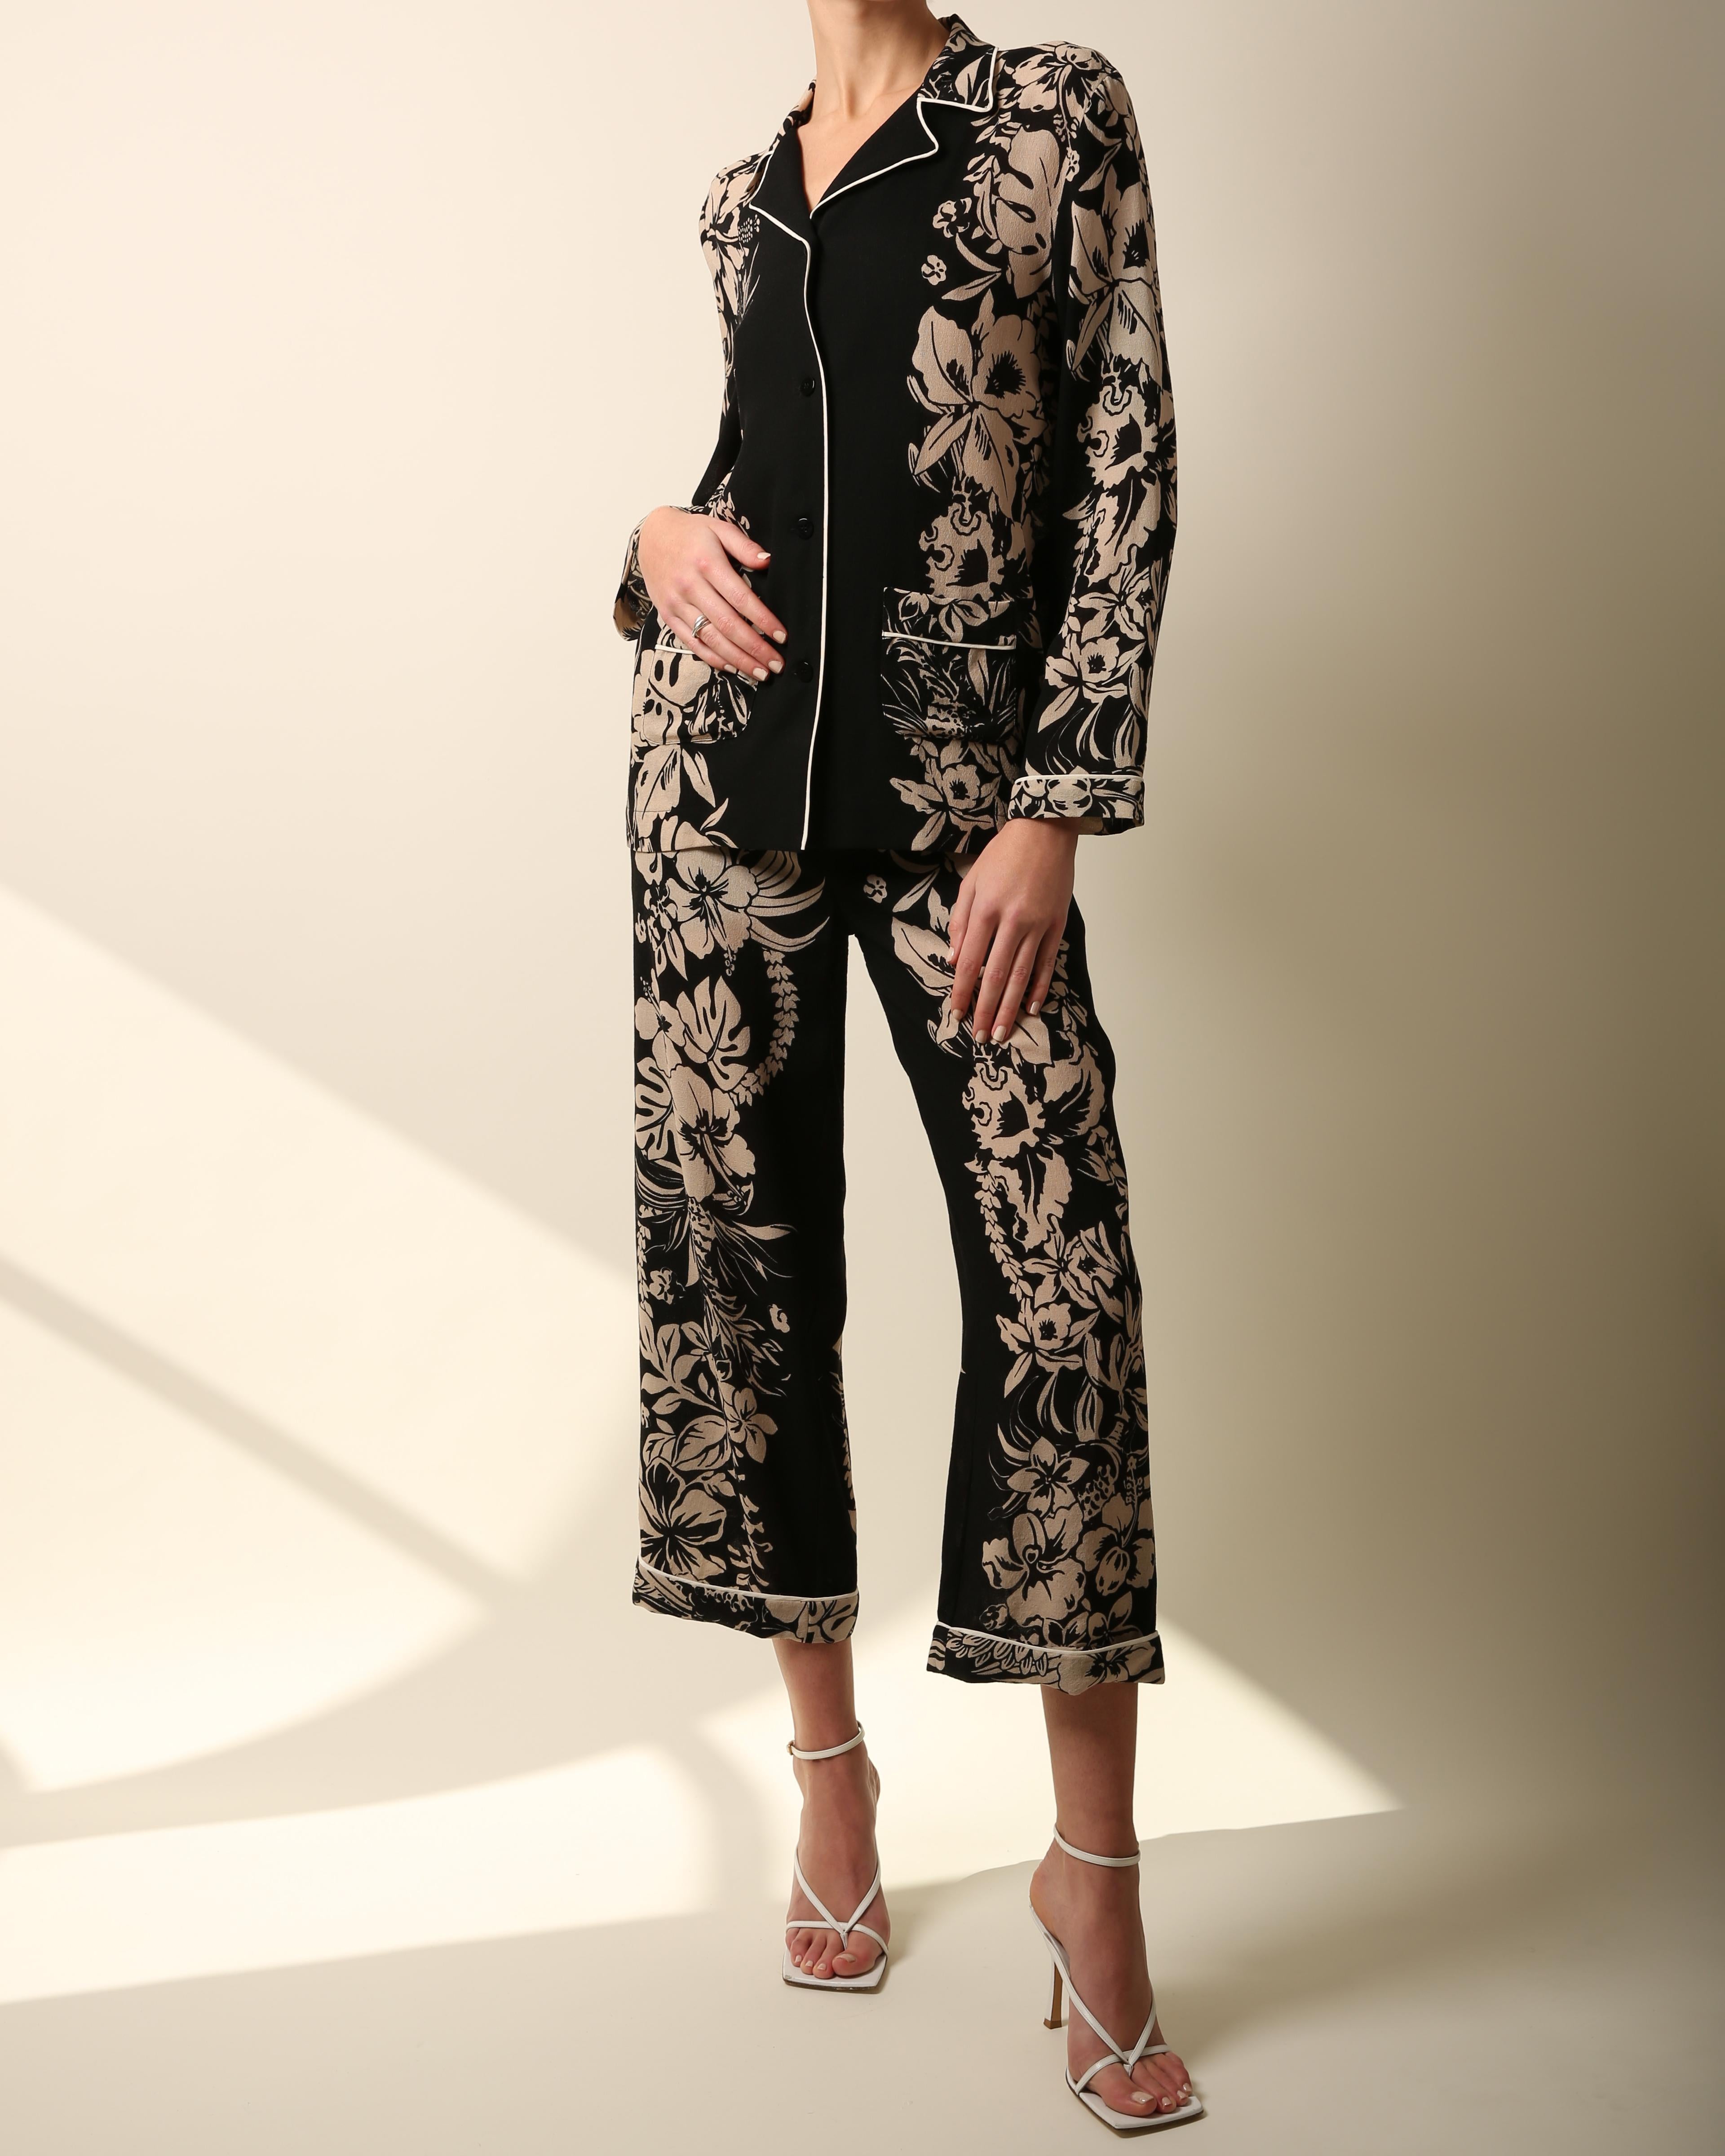 Women's Valentino pyjama style black nude floral print blouse wide dress pants jumpsuit